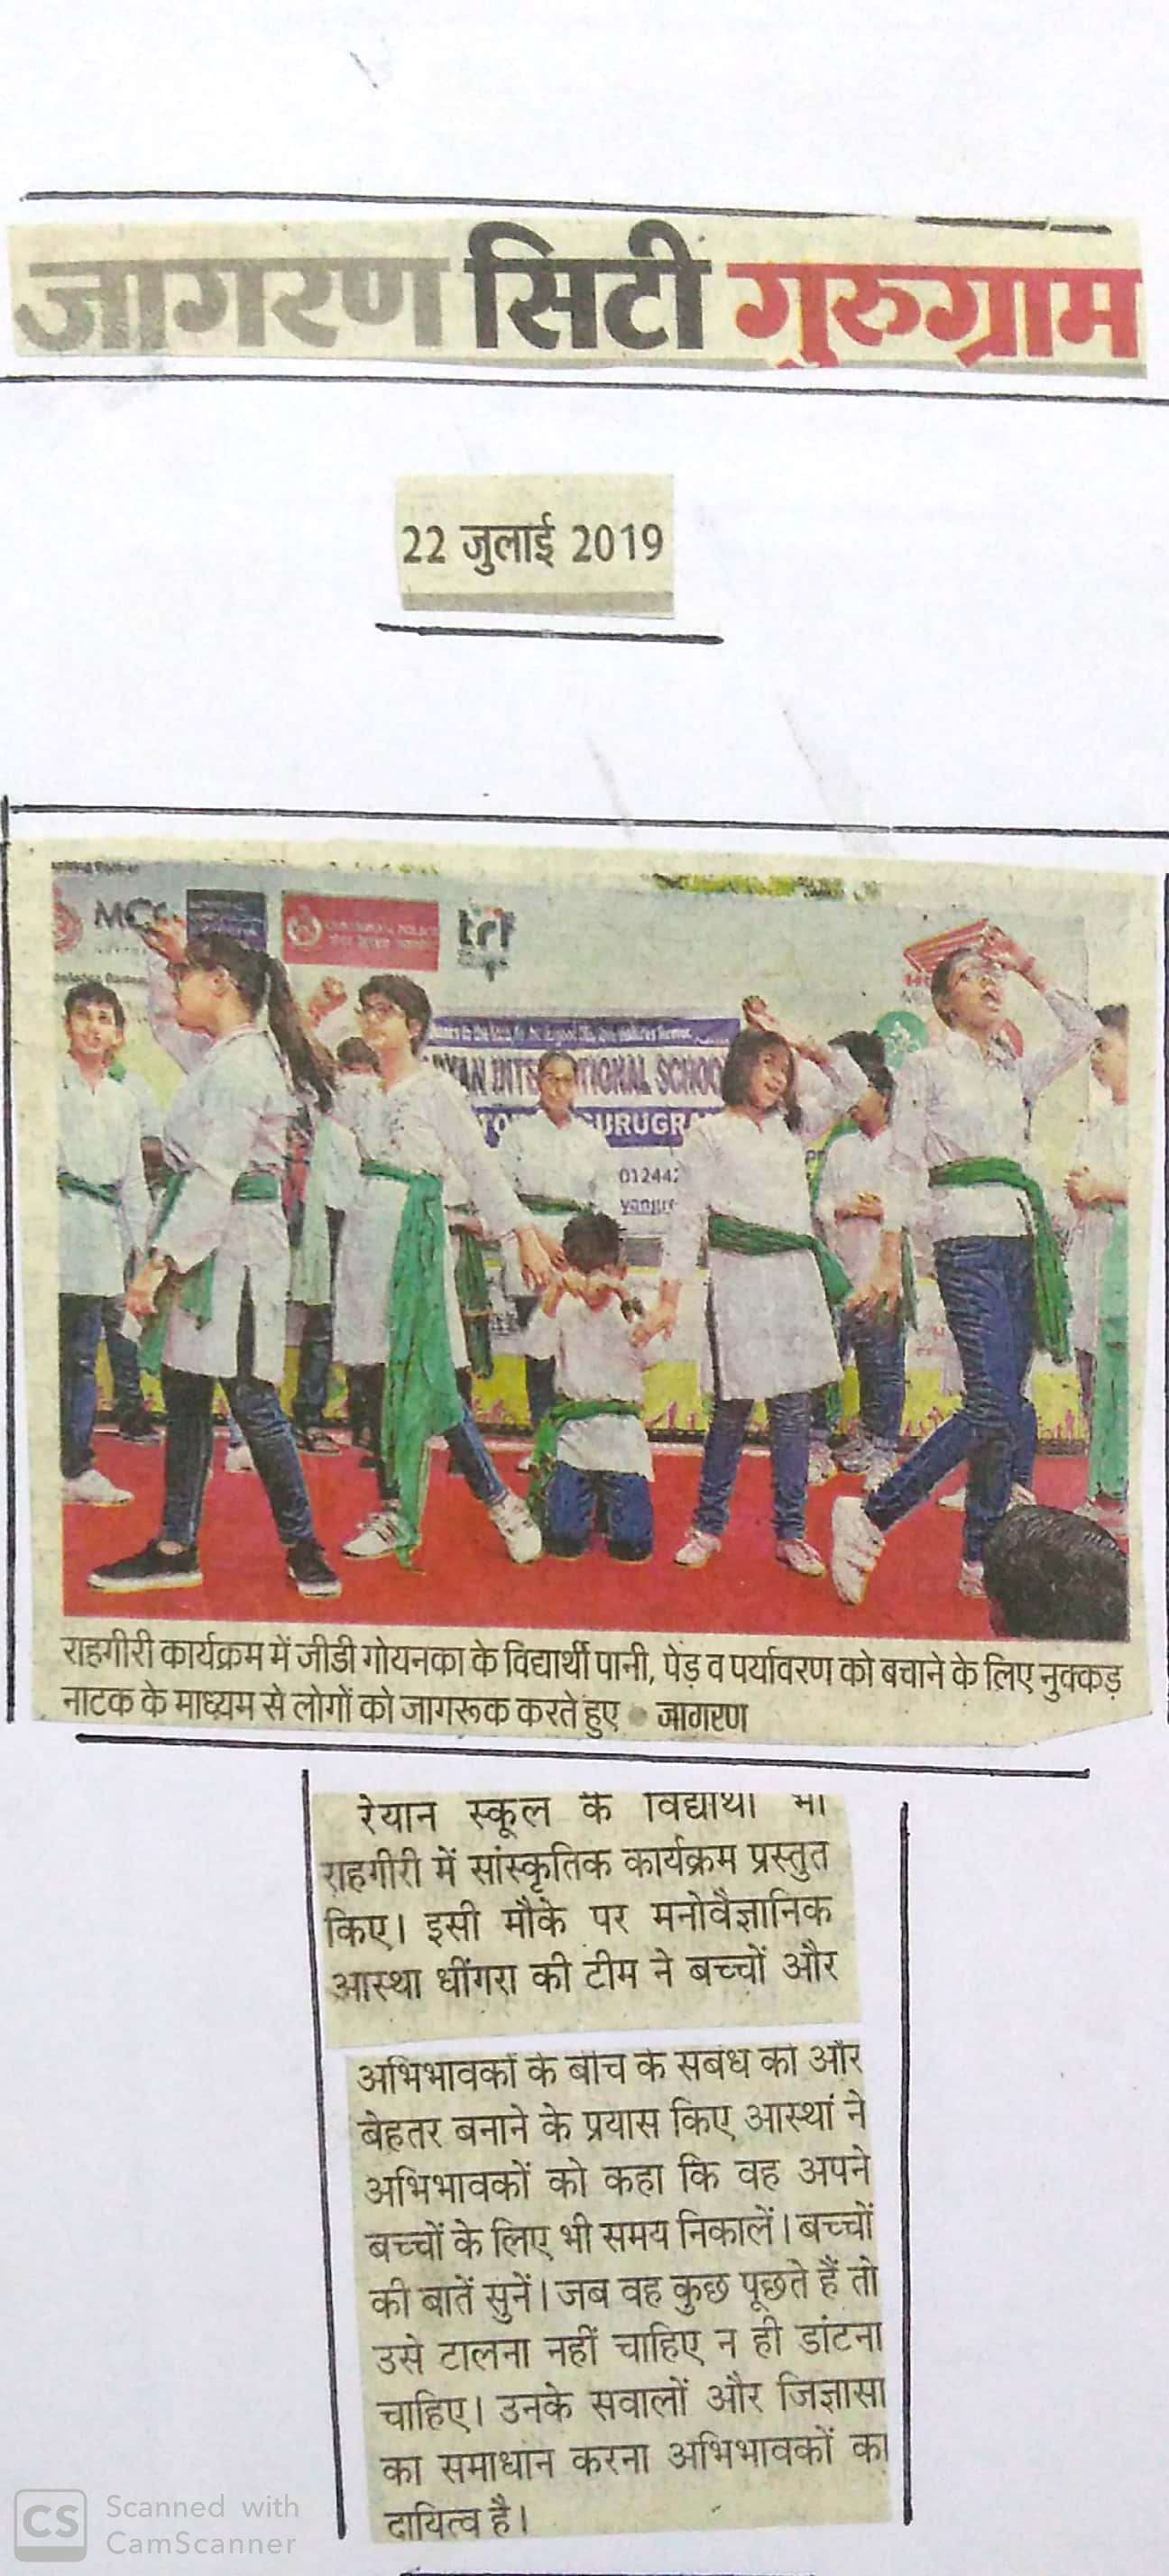 Students presented cultural acts in Raahgiri - Ryan International School, Sec 31 Gurgaon